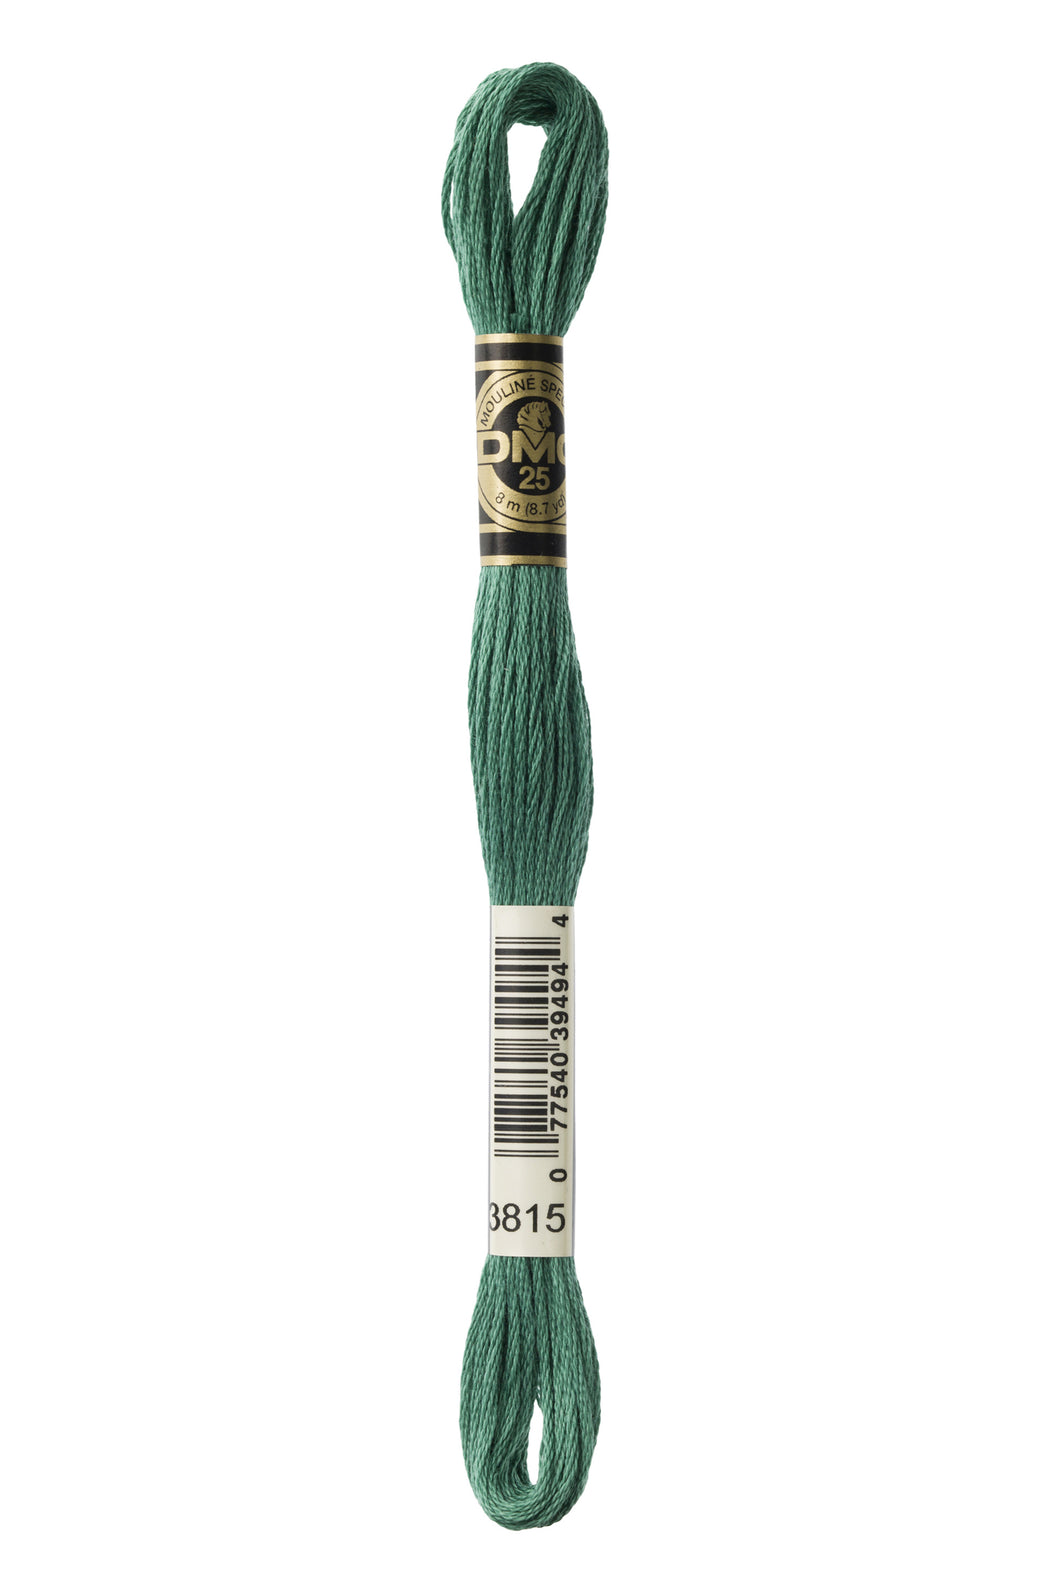 DMC 3815 Dark Celadon Green 6-Strand Embroidery Floss